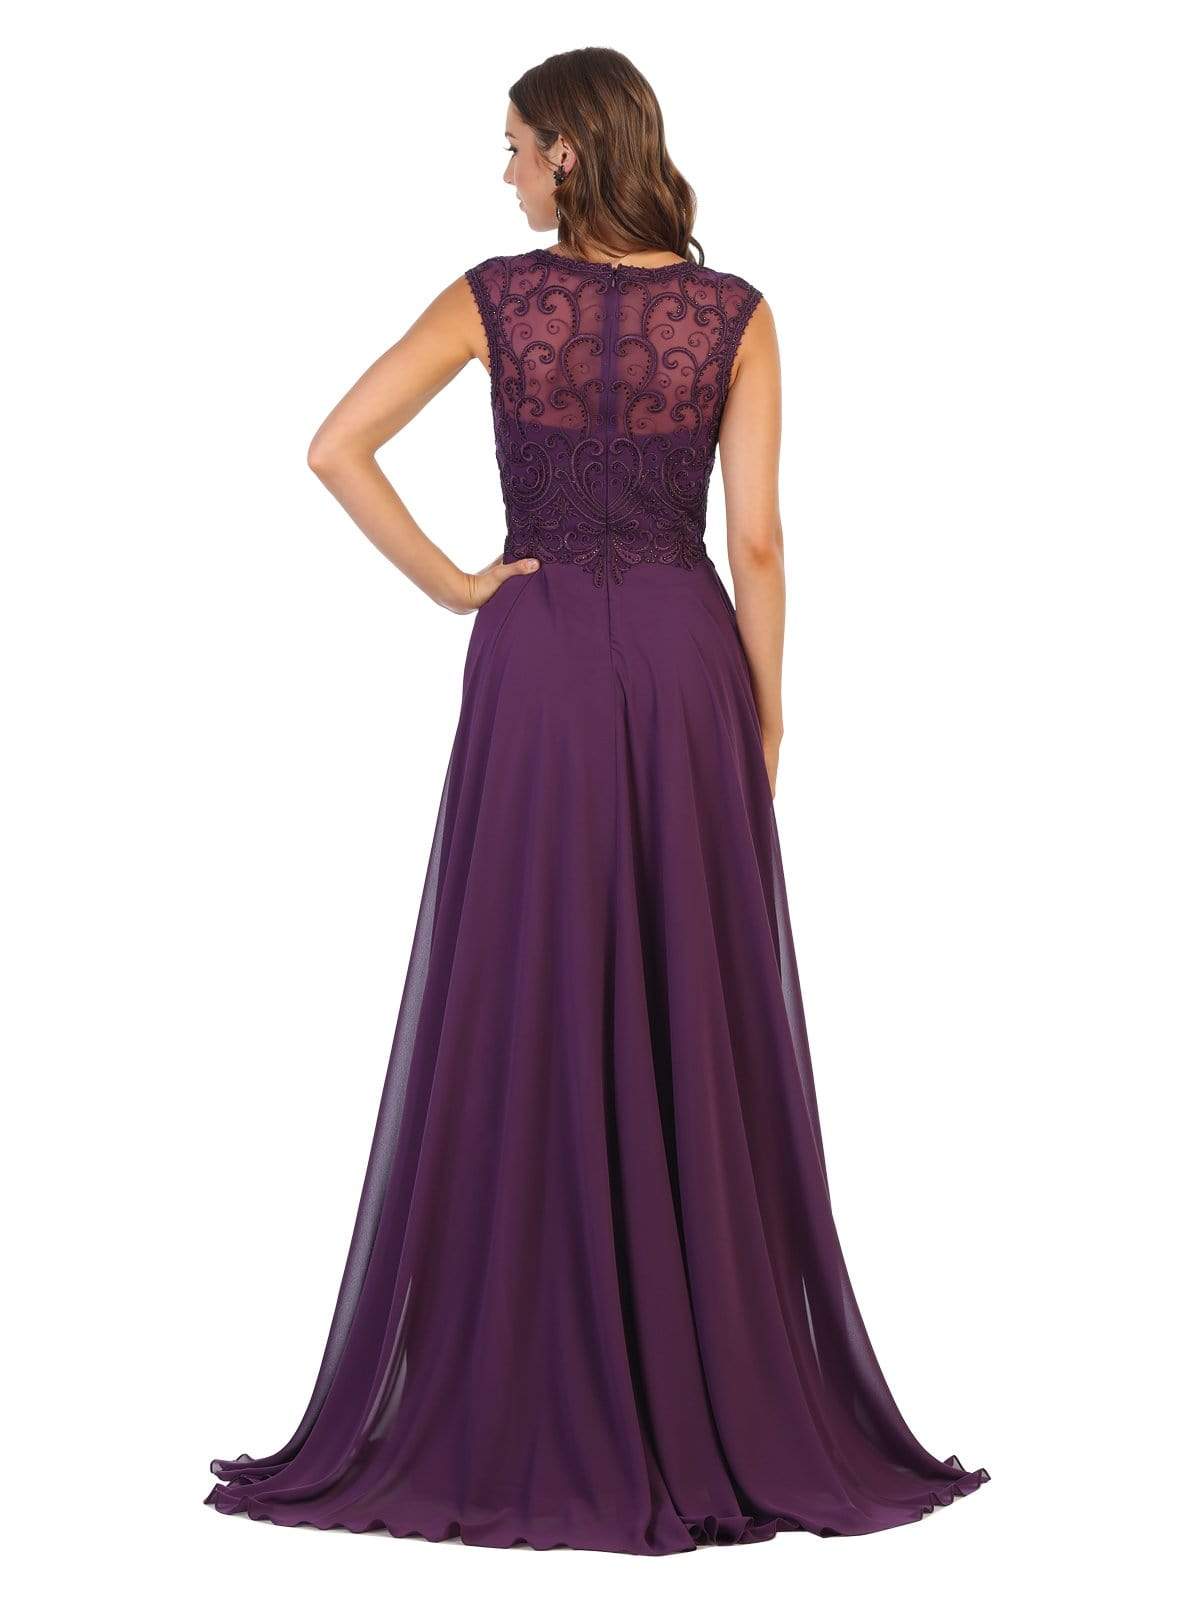 May Queen - MQ1707 Swirl Motif Embroidered Chiffon Dress Prom Dresses